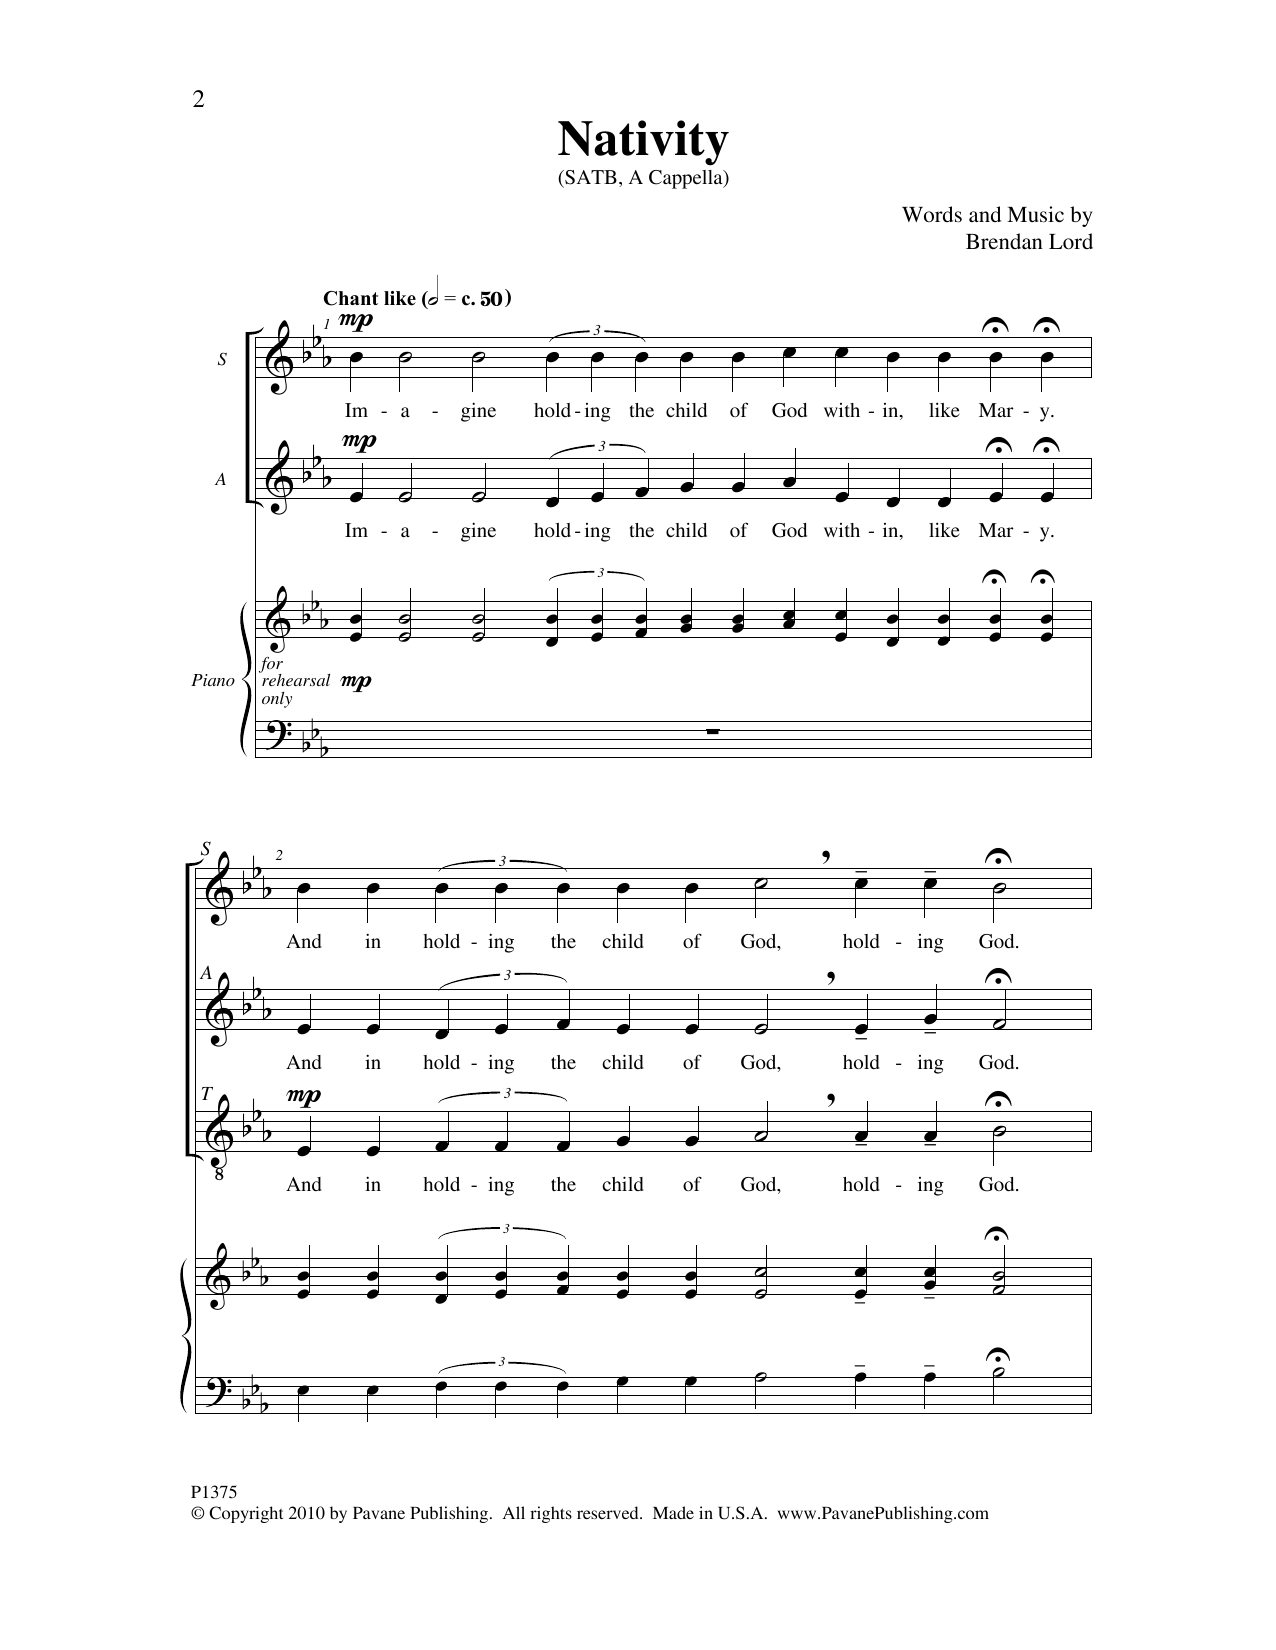 Brendan Lord Nativity Sheet Music Notes & Chords for SATB Choir - Download or Print PDF